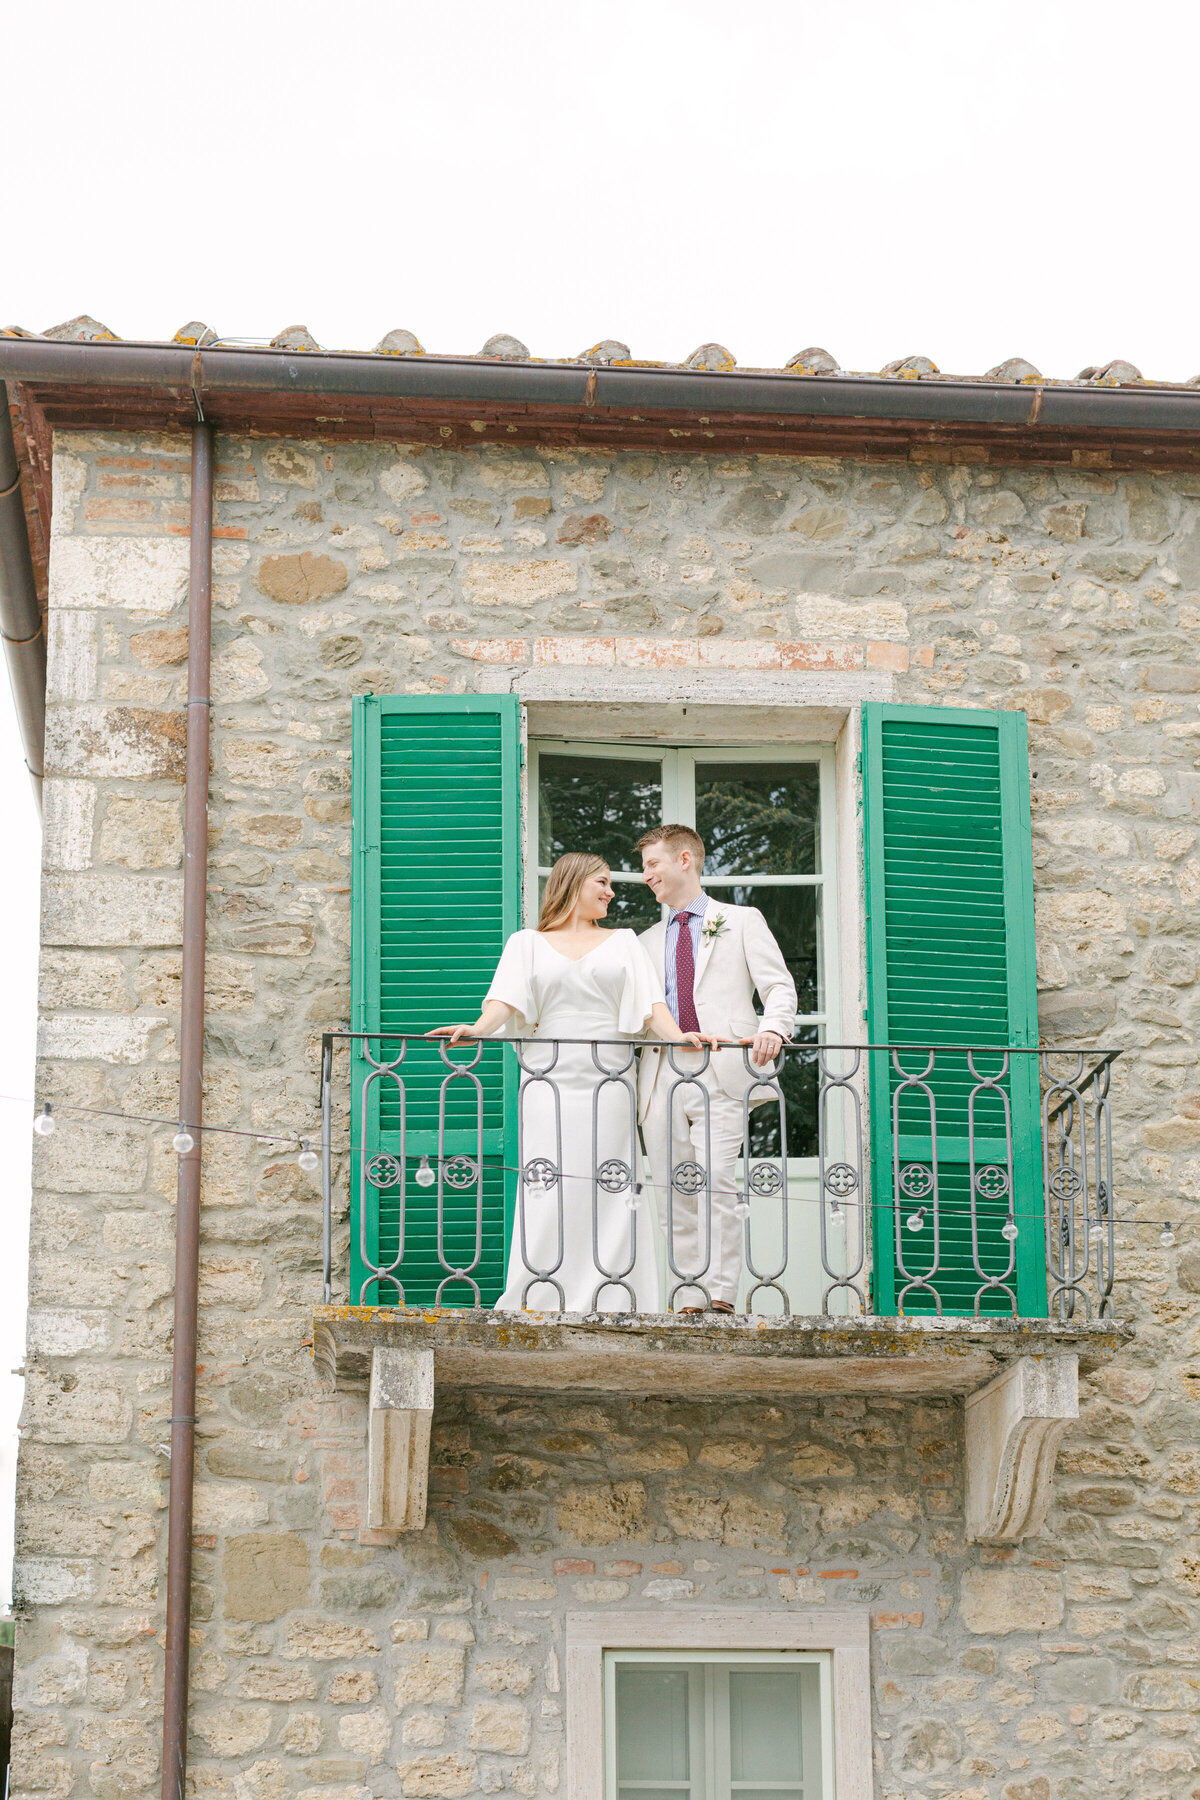 Borgo-Laticastelli-Italy-Wedding-Photographer-Ava-Vienneau-145